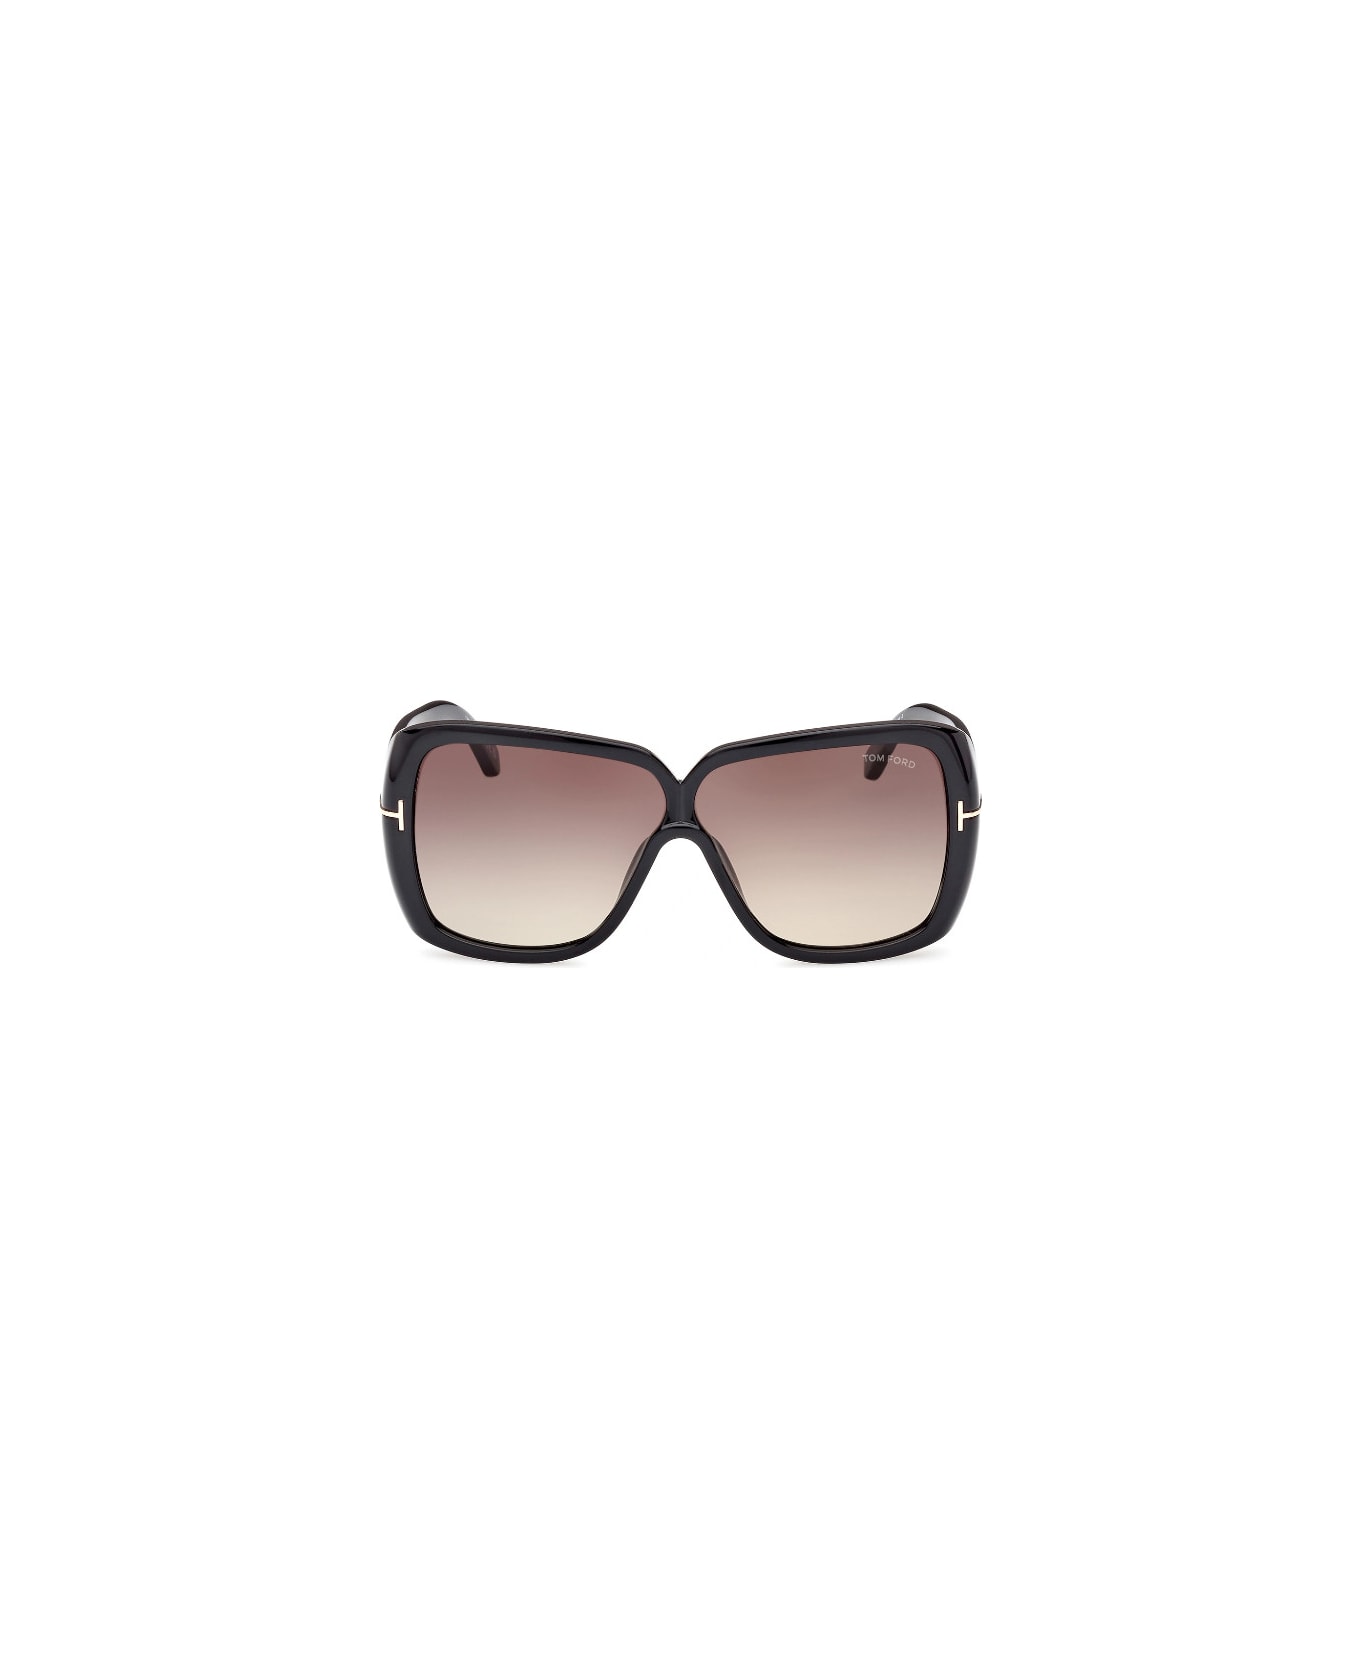 Tom Ford Eyewear TF1037 01B Sunglasses